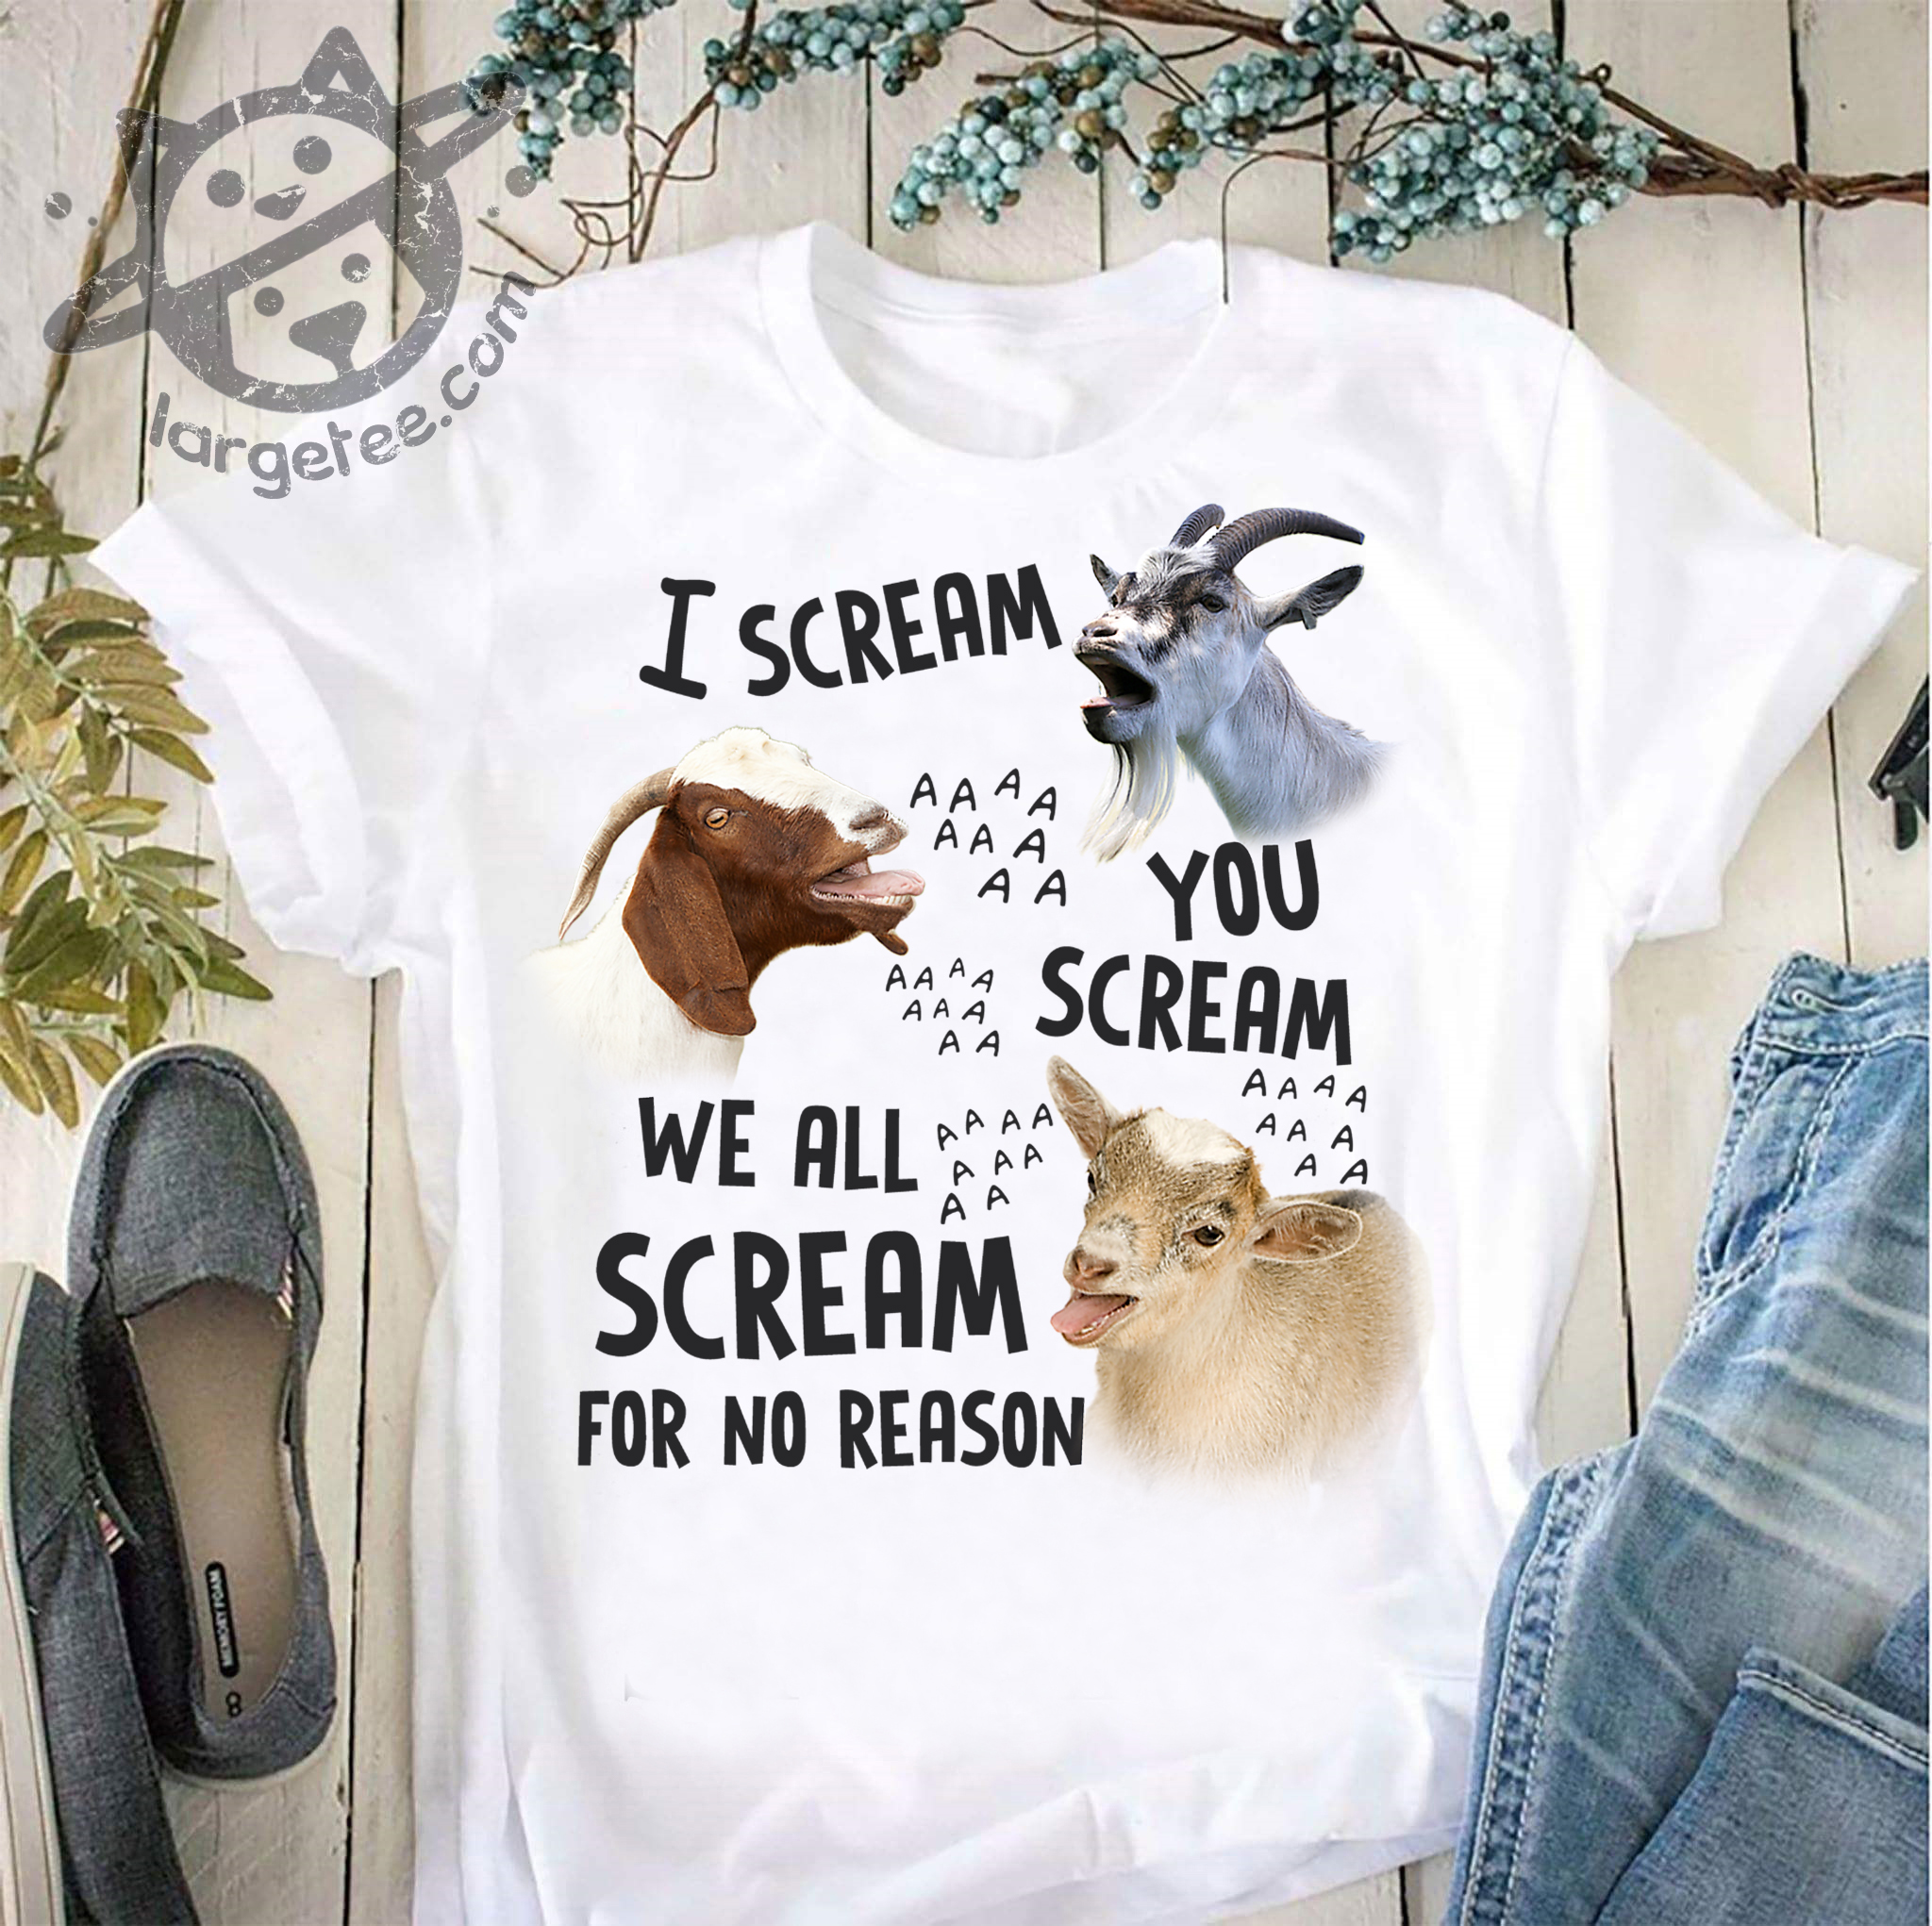 I scream you scream we all scream for no reason - Screaming goat